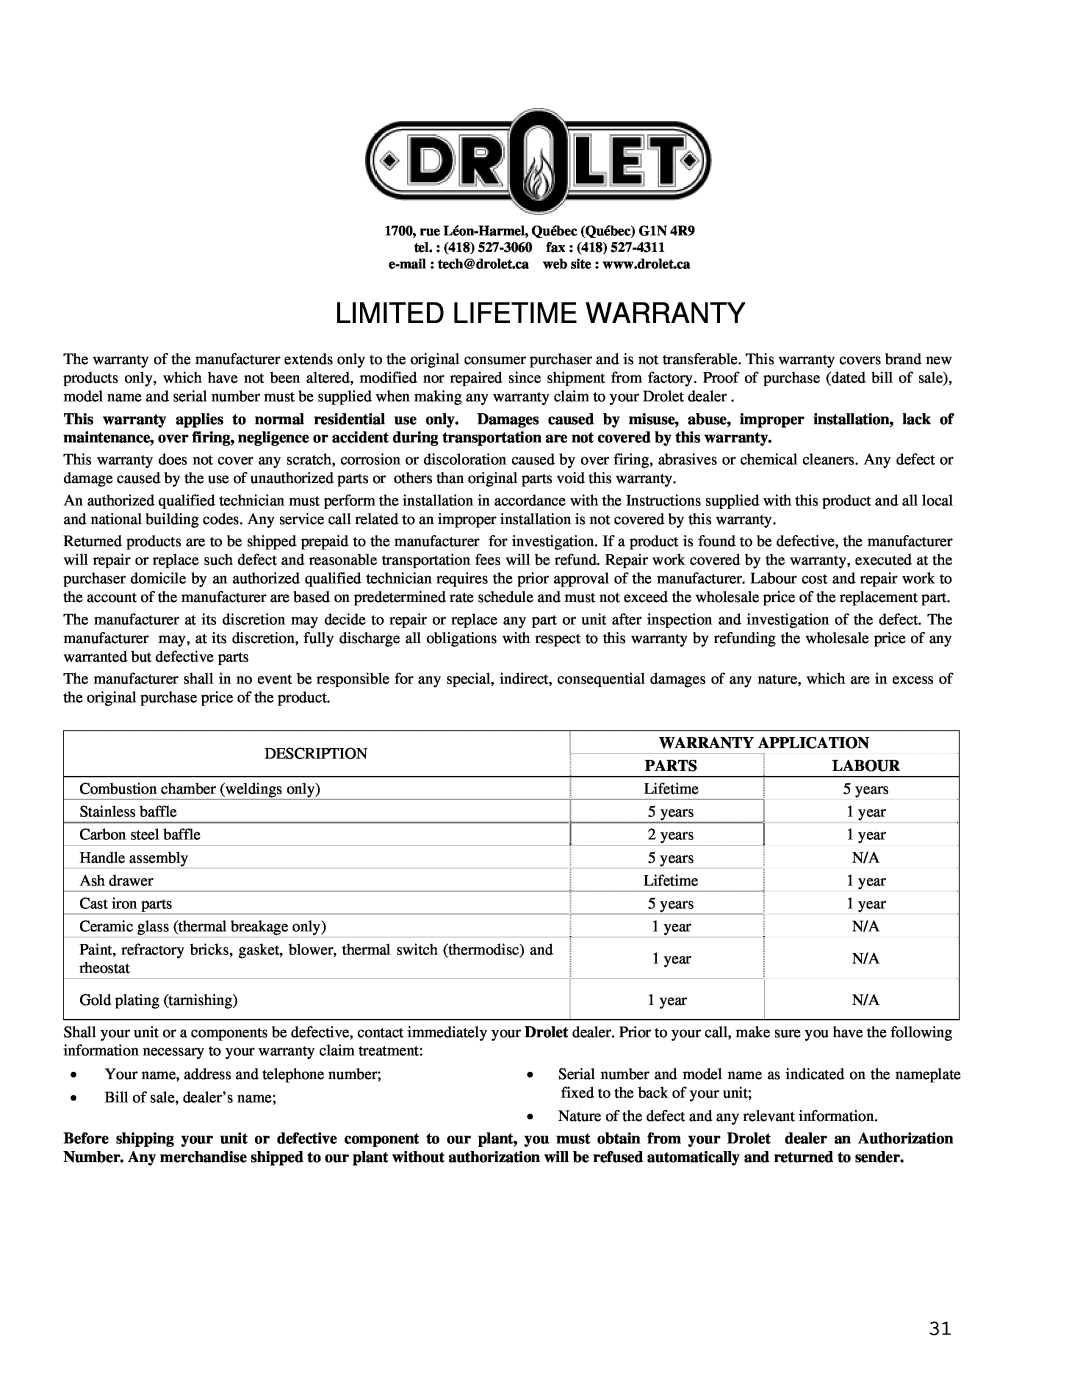 Drolet CS1200 manual Limited Lifetime Warranty, Warranty Application, Parts, Labour 